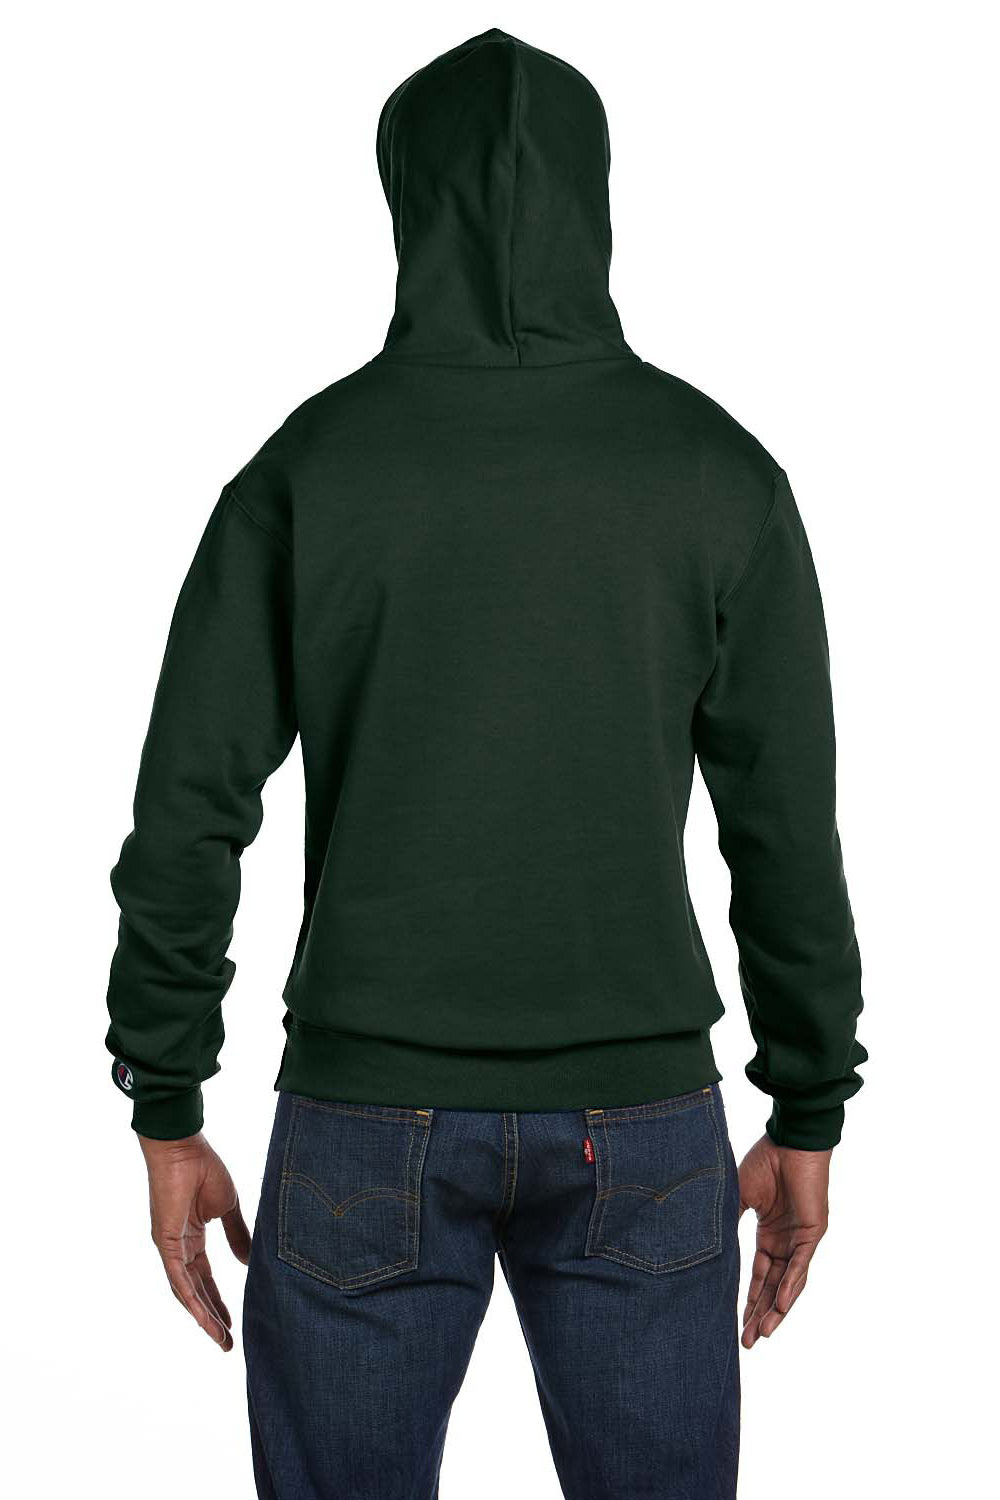 Champion S700 Mens Dark Hooded Dry Fleece — Eco Double Hoodie Green Moisture Sweatshirt Wicking